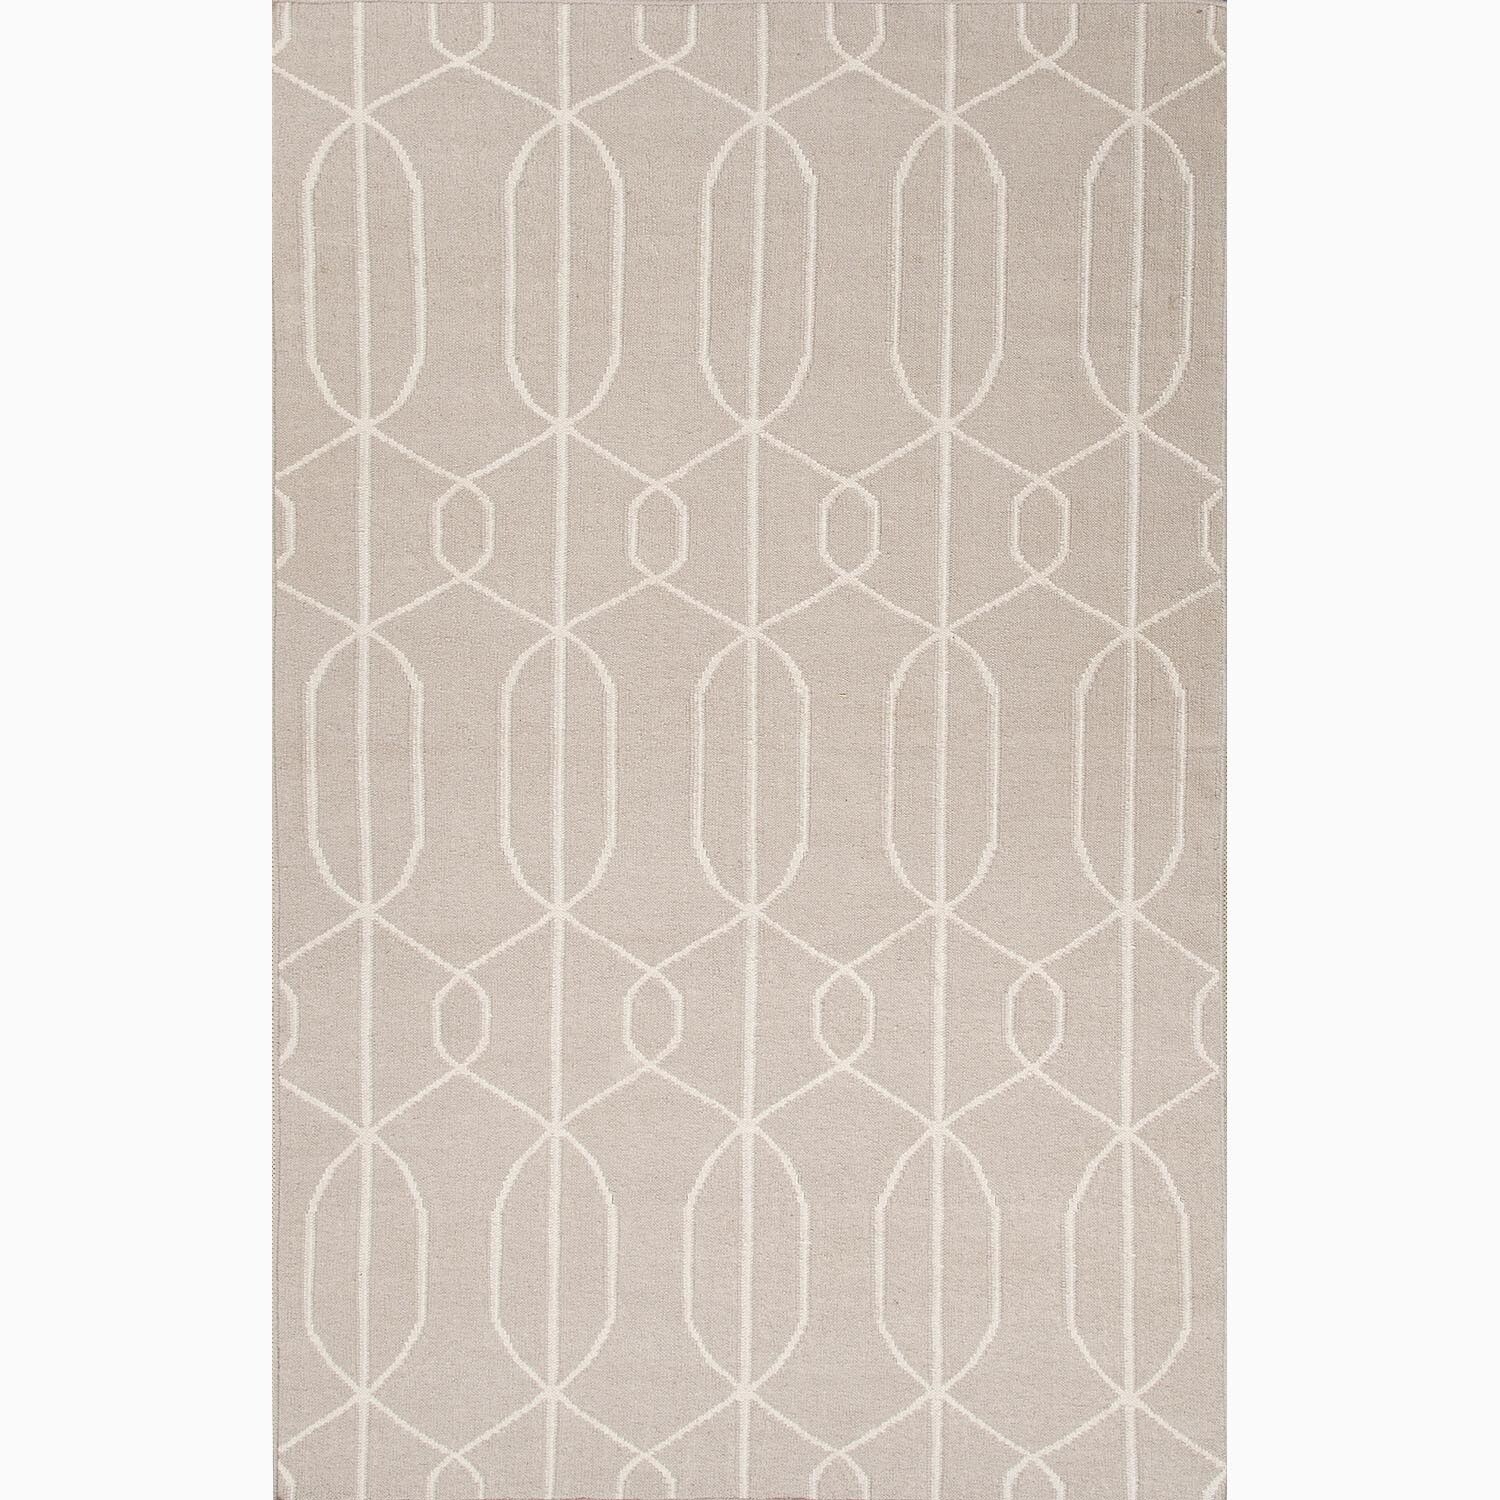 Handmade Geometric pattern Gray/ Ivory Wool Area Rug (8x10)